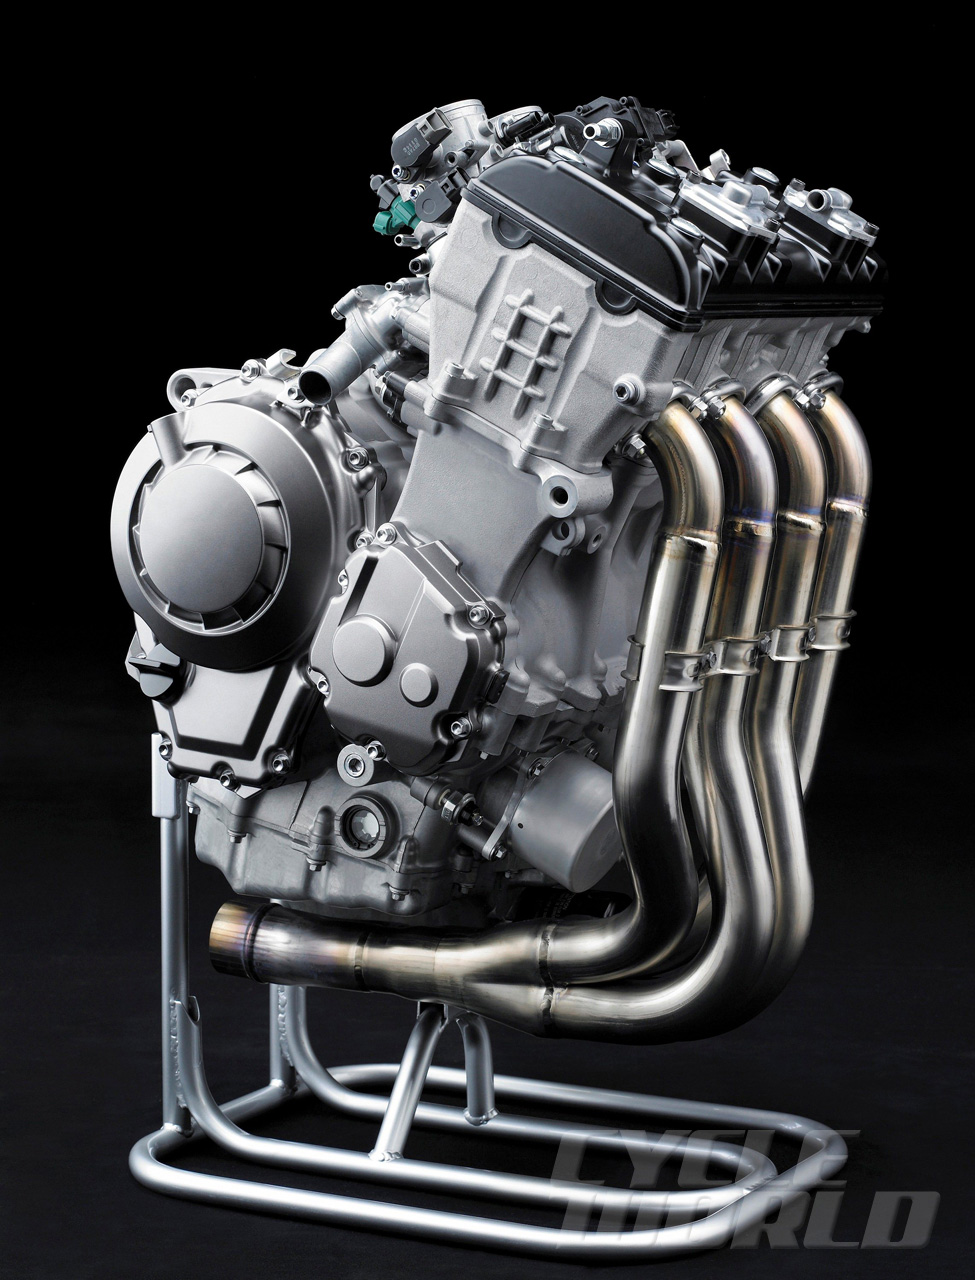 2015-Kawasaki-Ninja-ZX-10R-Engine-1.jpg